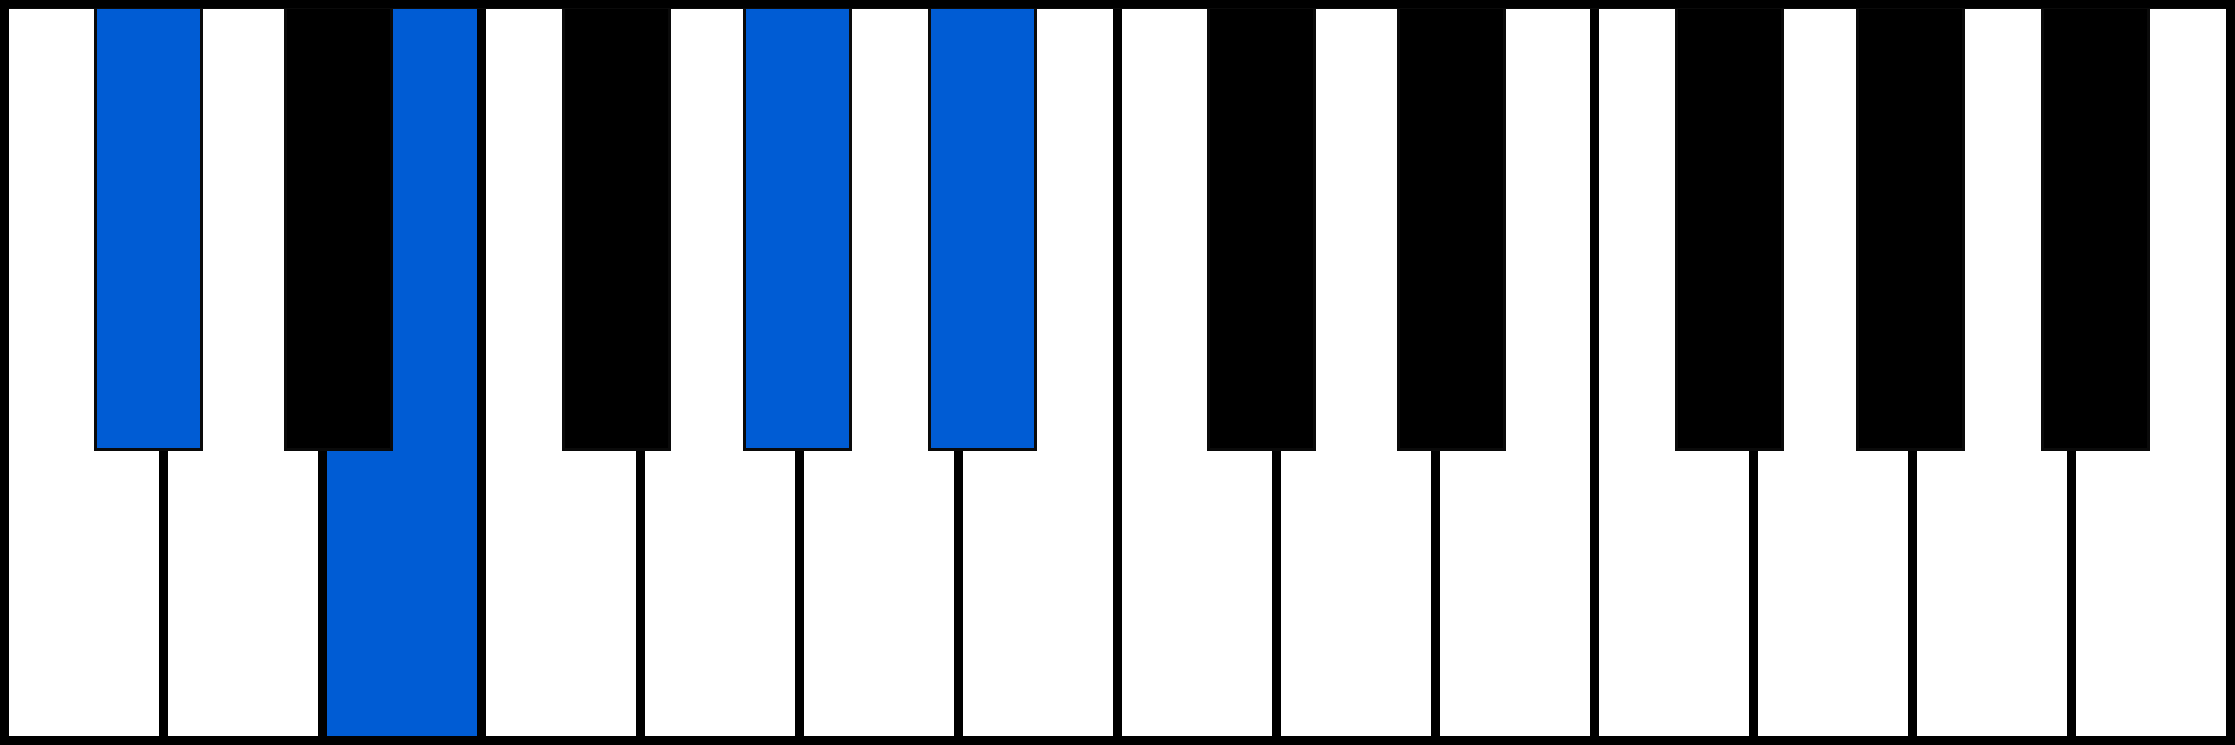 C#m6 piano chord fingering